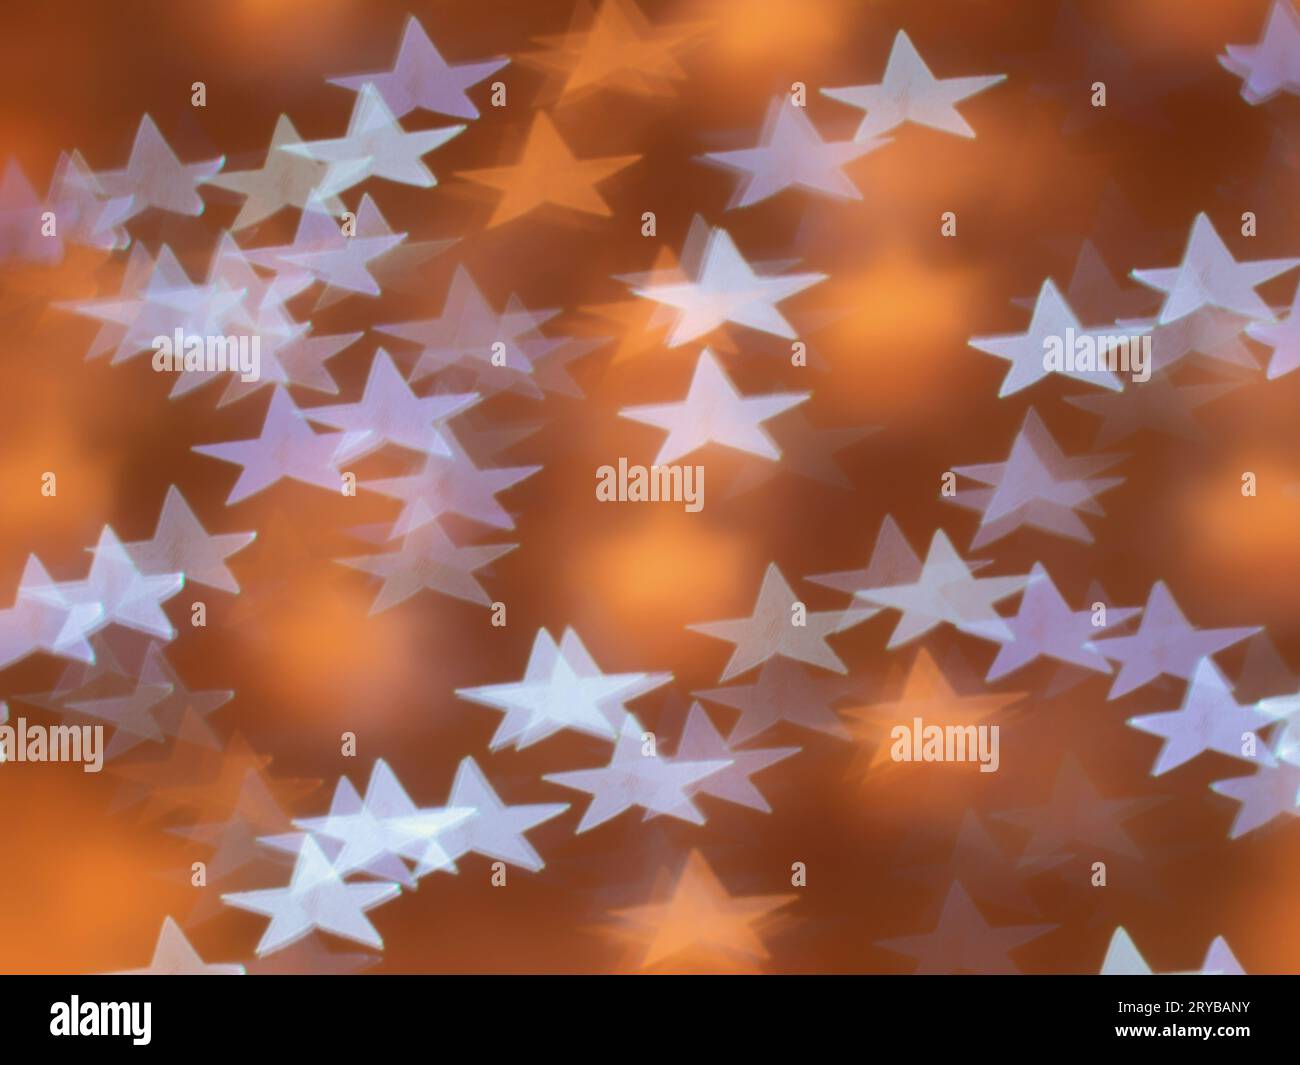 Orizontal photo of star shaped bookeh Stock Photo